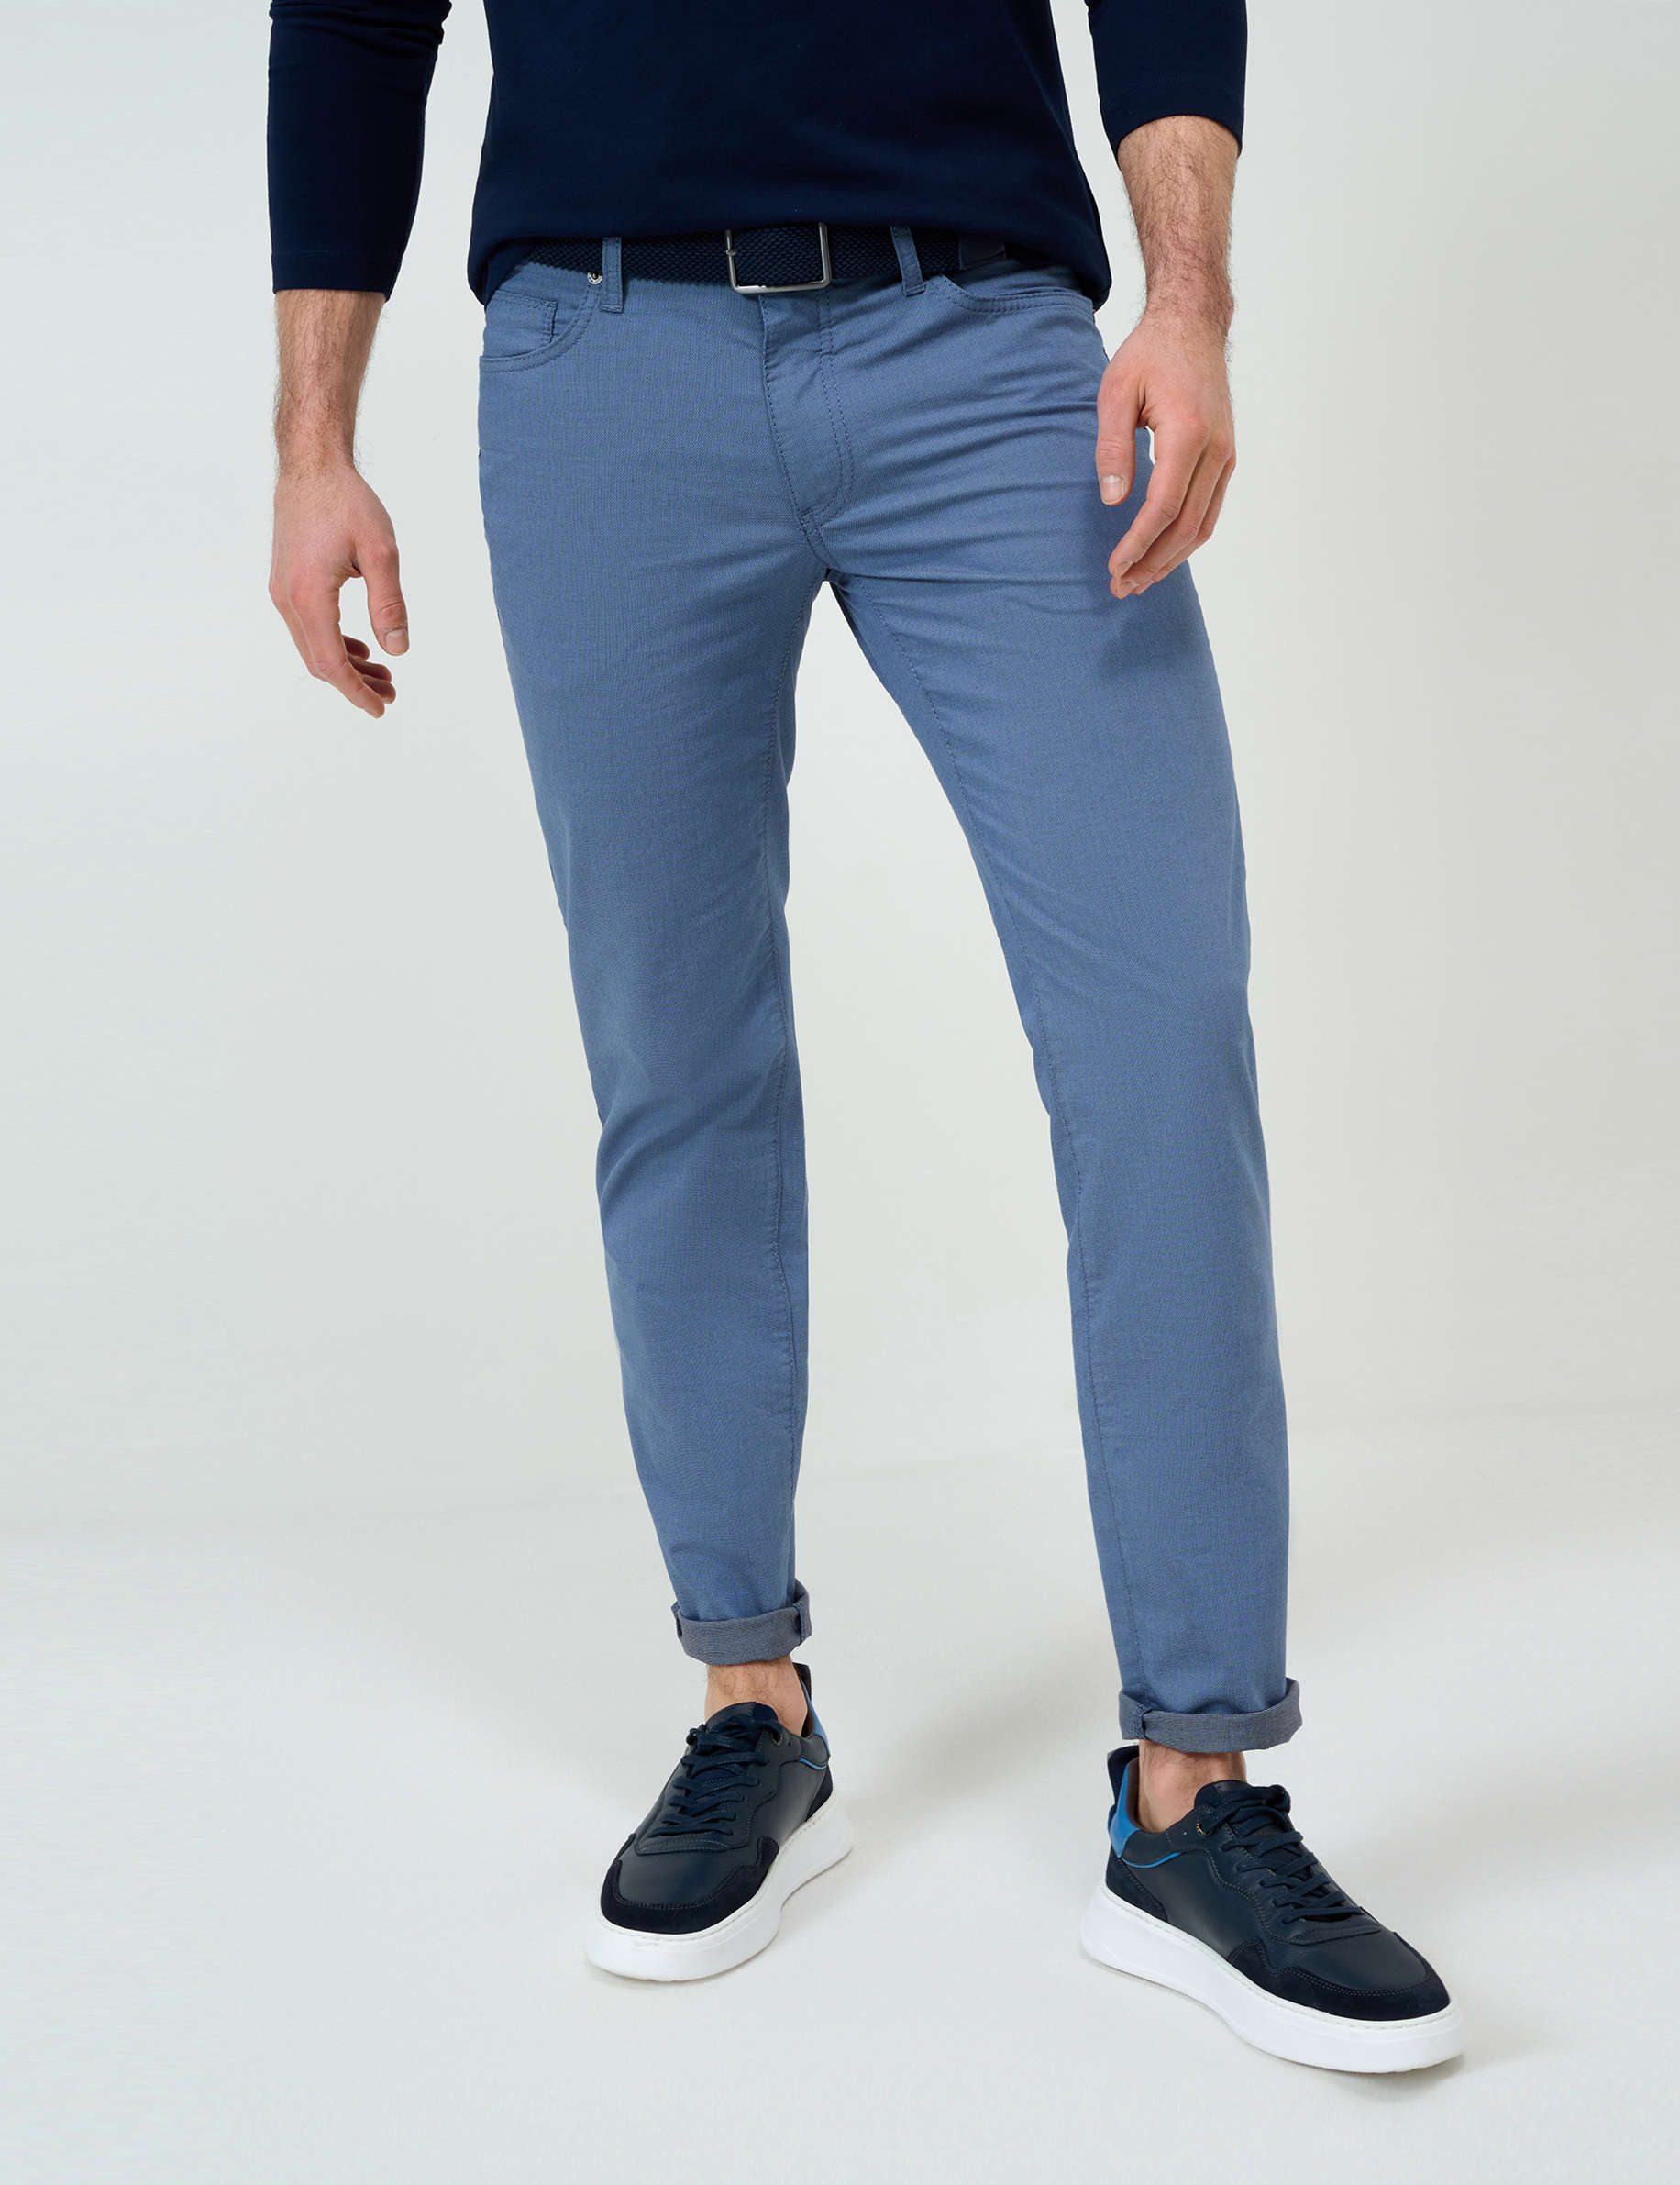 Men Style CADIZ DUSTY BLUE Straight Fit Model Front